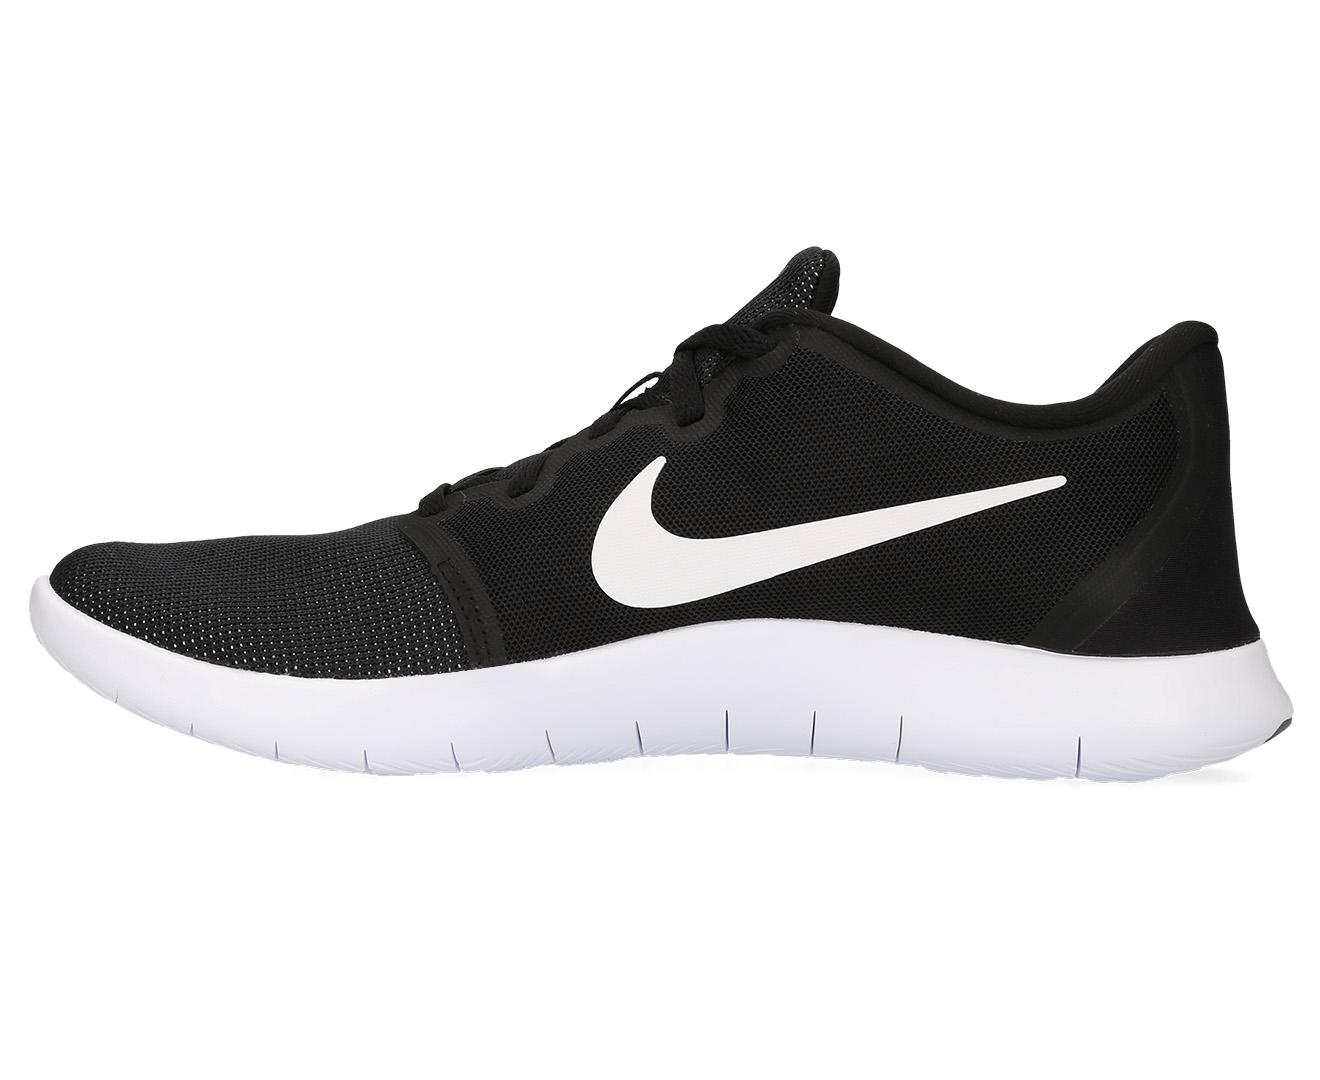 Nike Mens Flex Contact 2 Shoe Black White Cool Grey Nz